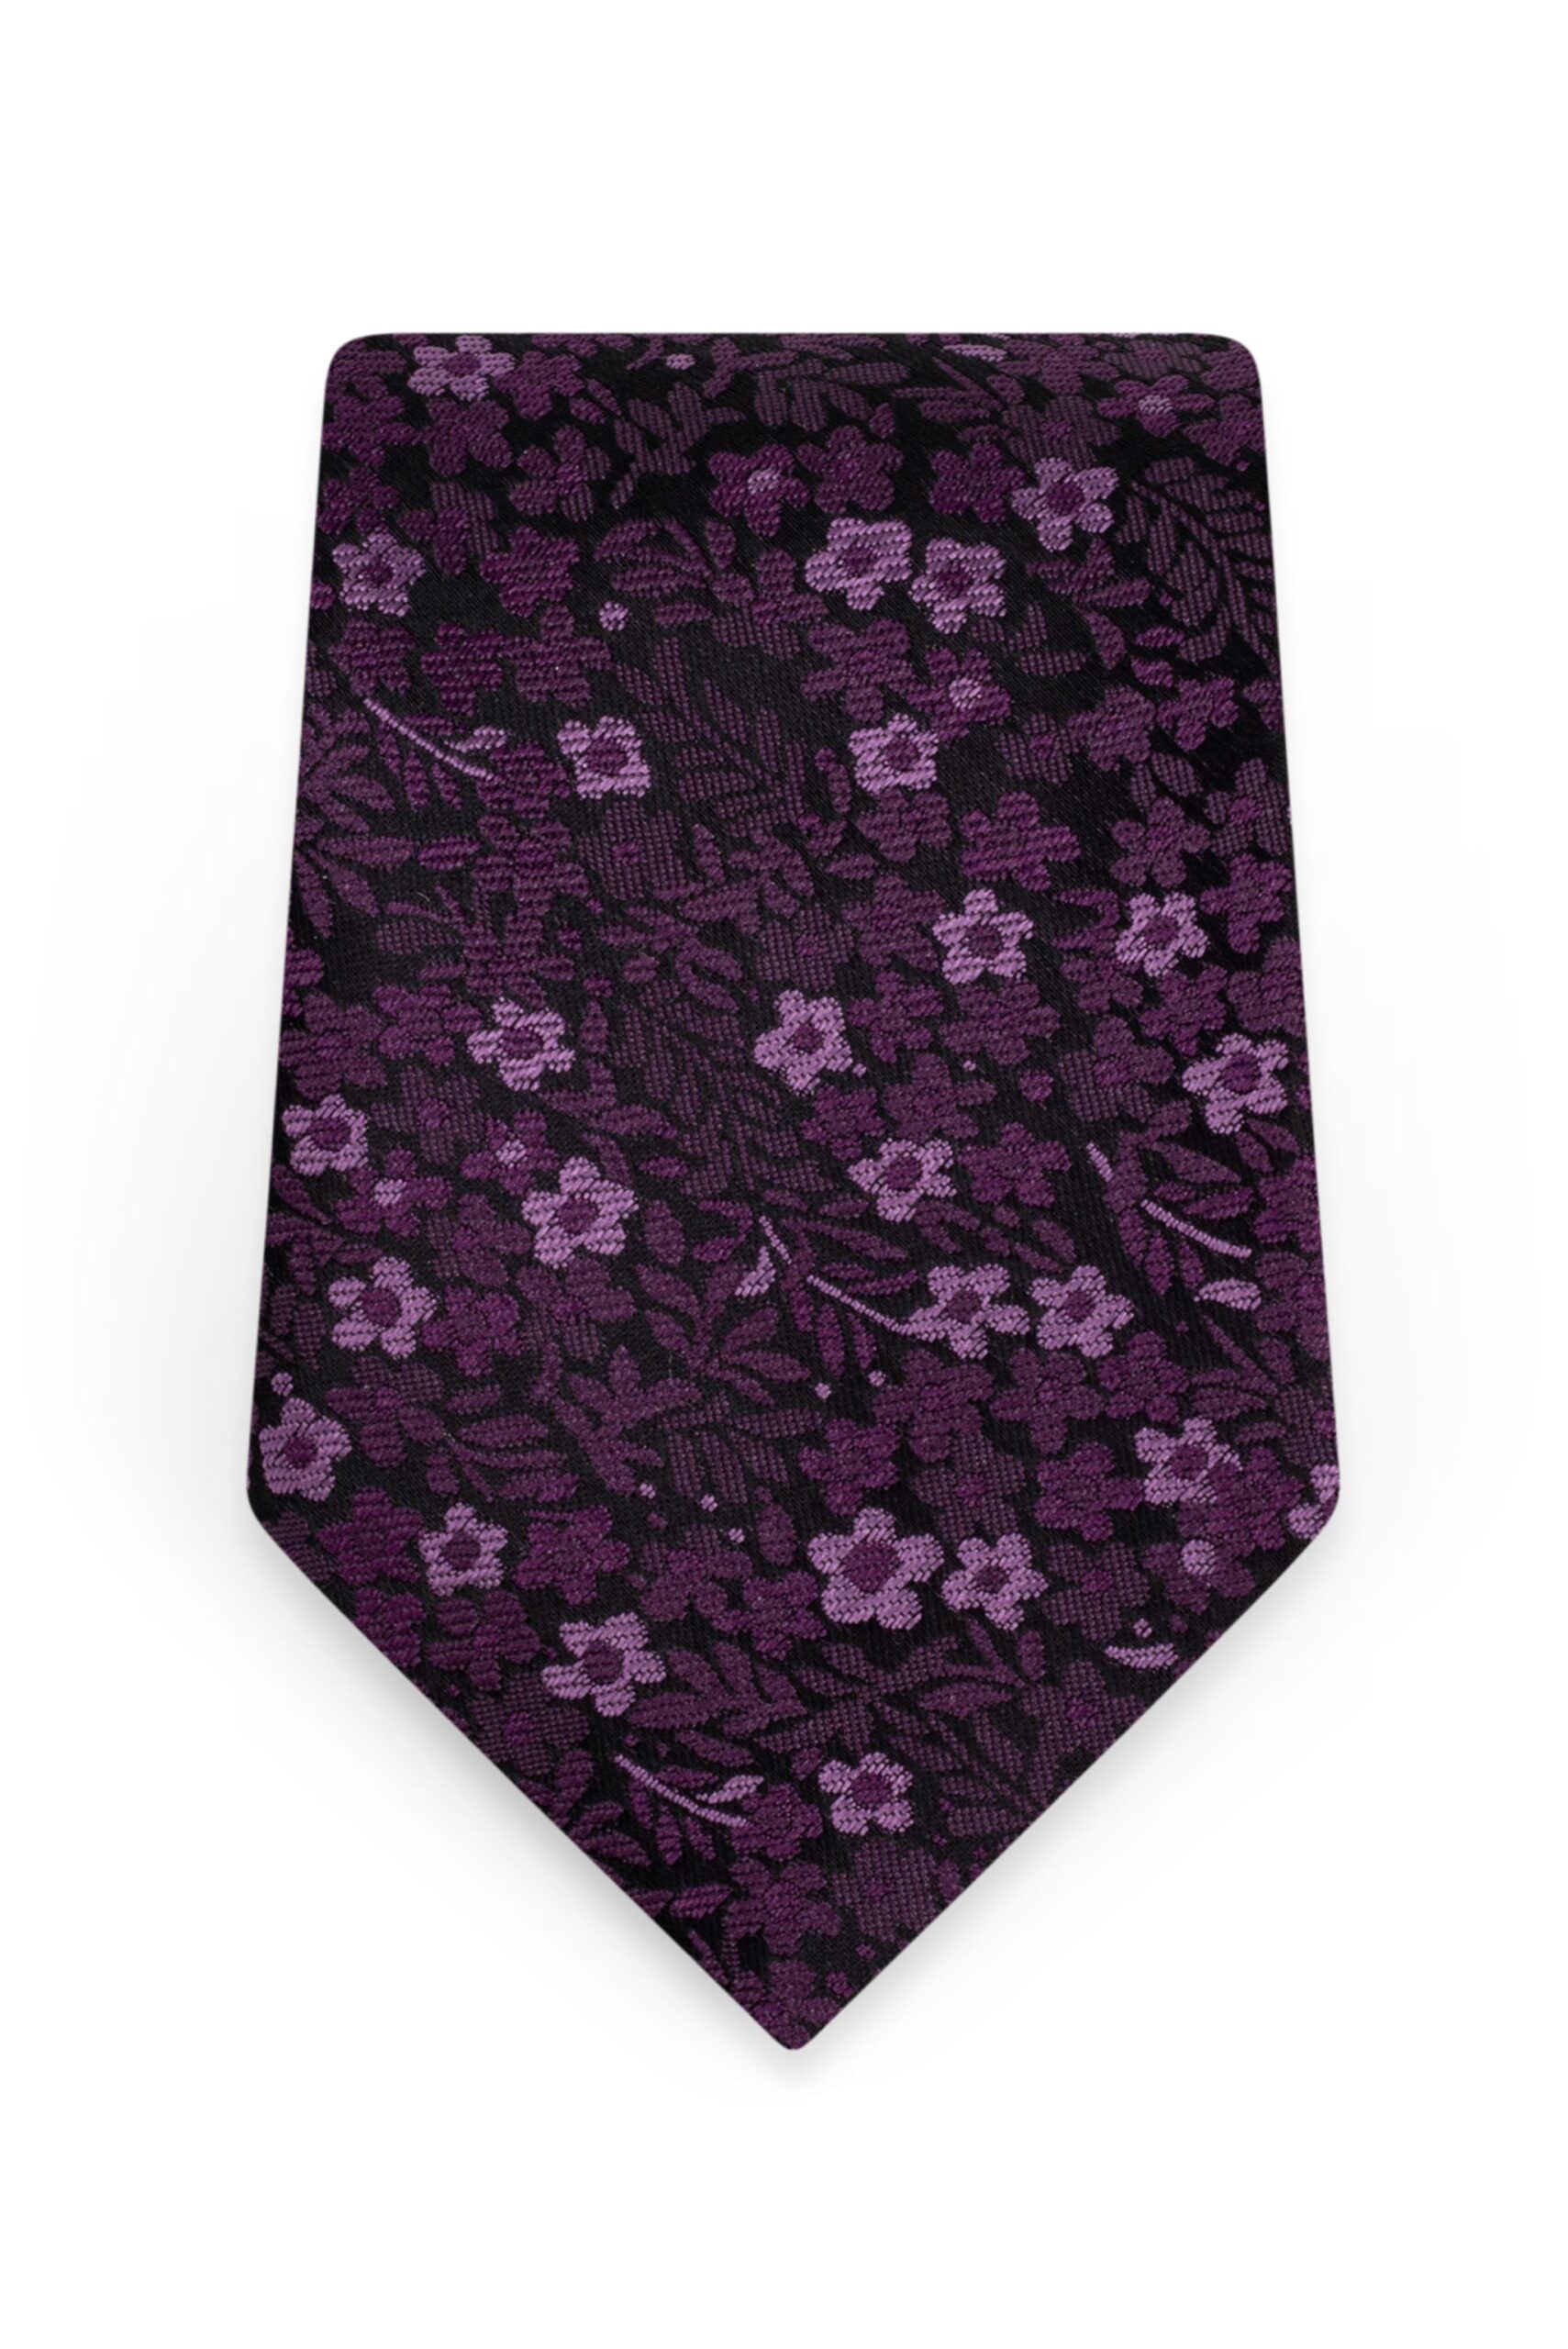 Floral Plum Self-Tie Windsor Tie